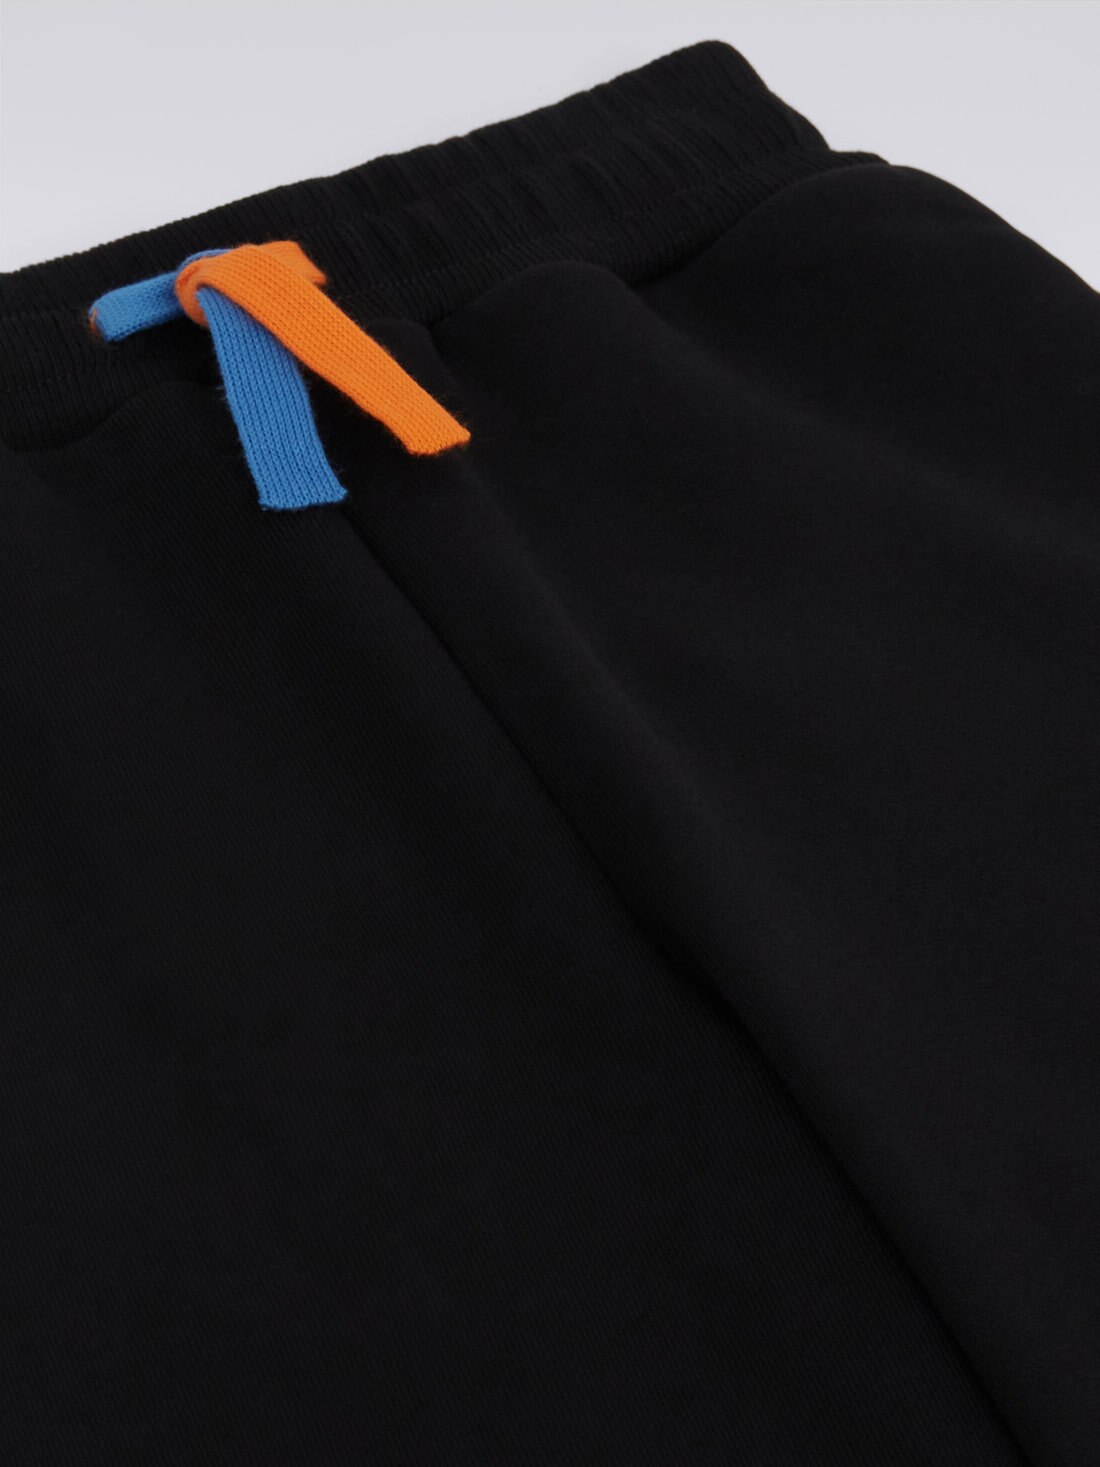 Cotton fleece joggers with dégradé logo, Black    - KS23WI0HBV00E3S91H3 - 2